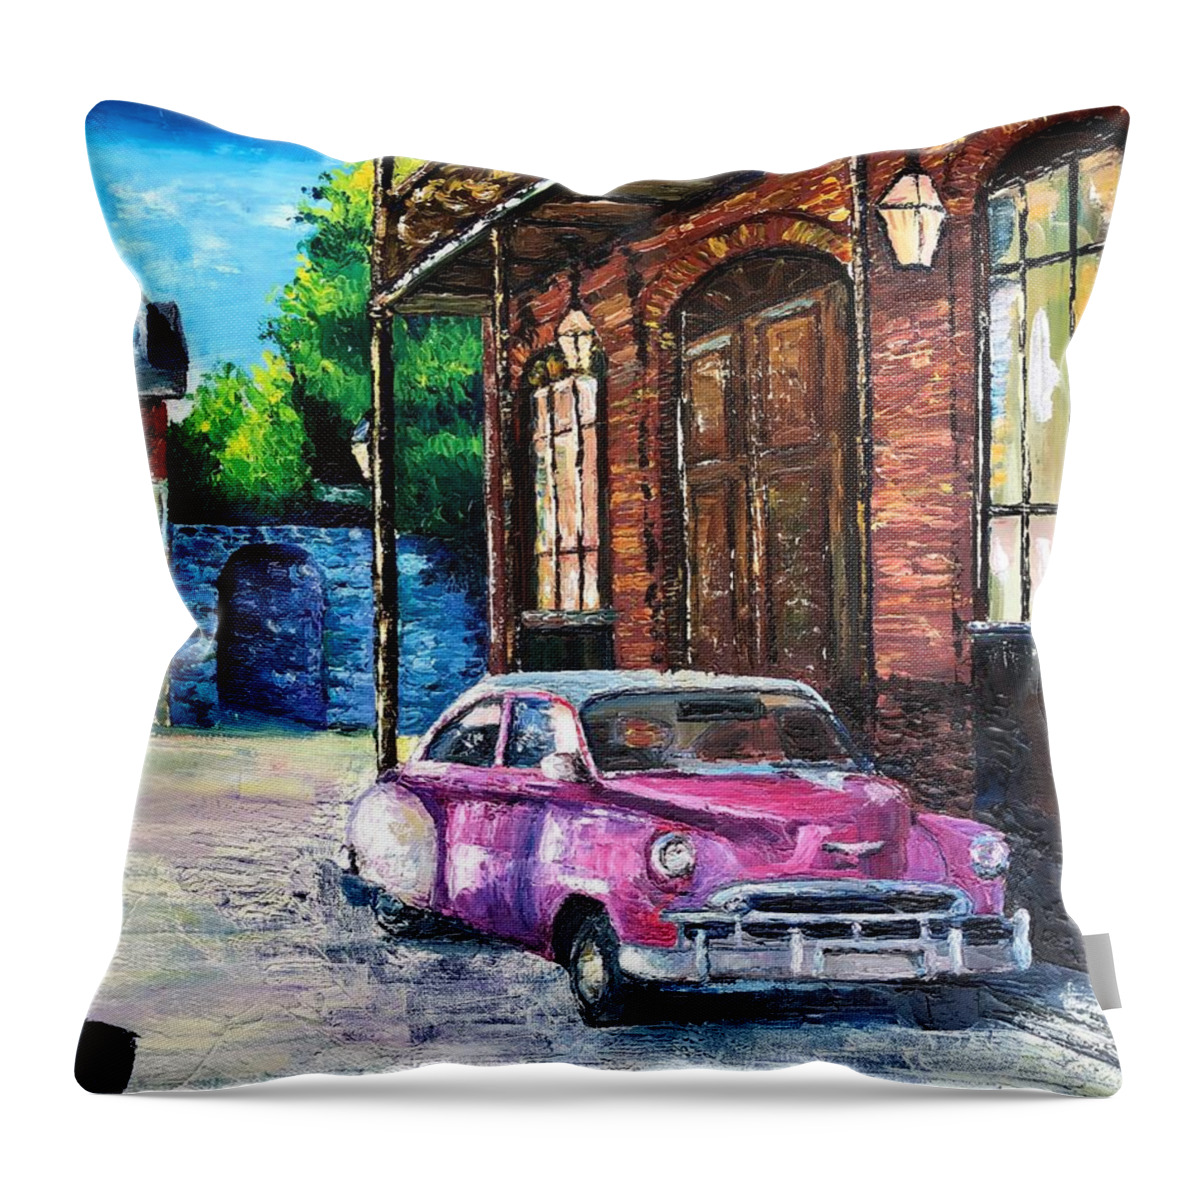 New Orleans Throw Pillow featuring the painting Voiture dans les Quartiers Car in the Quarters by Lauren Luna